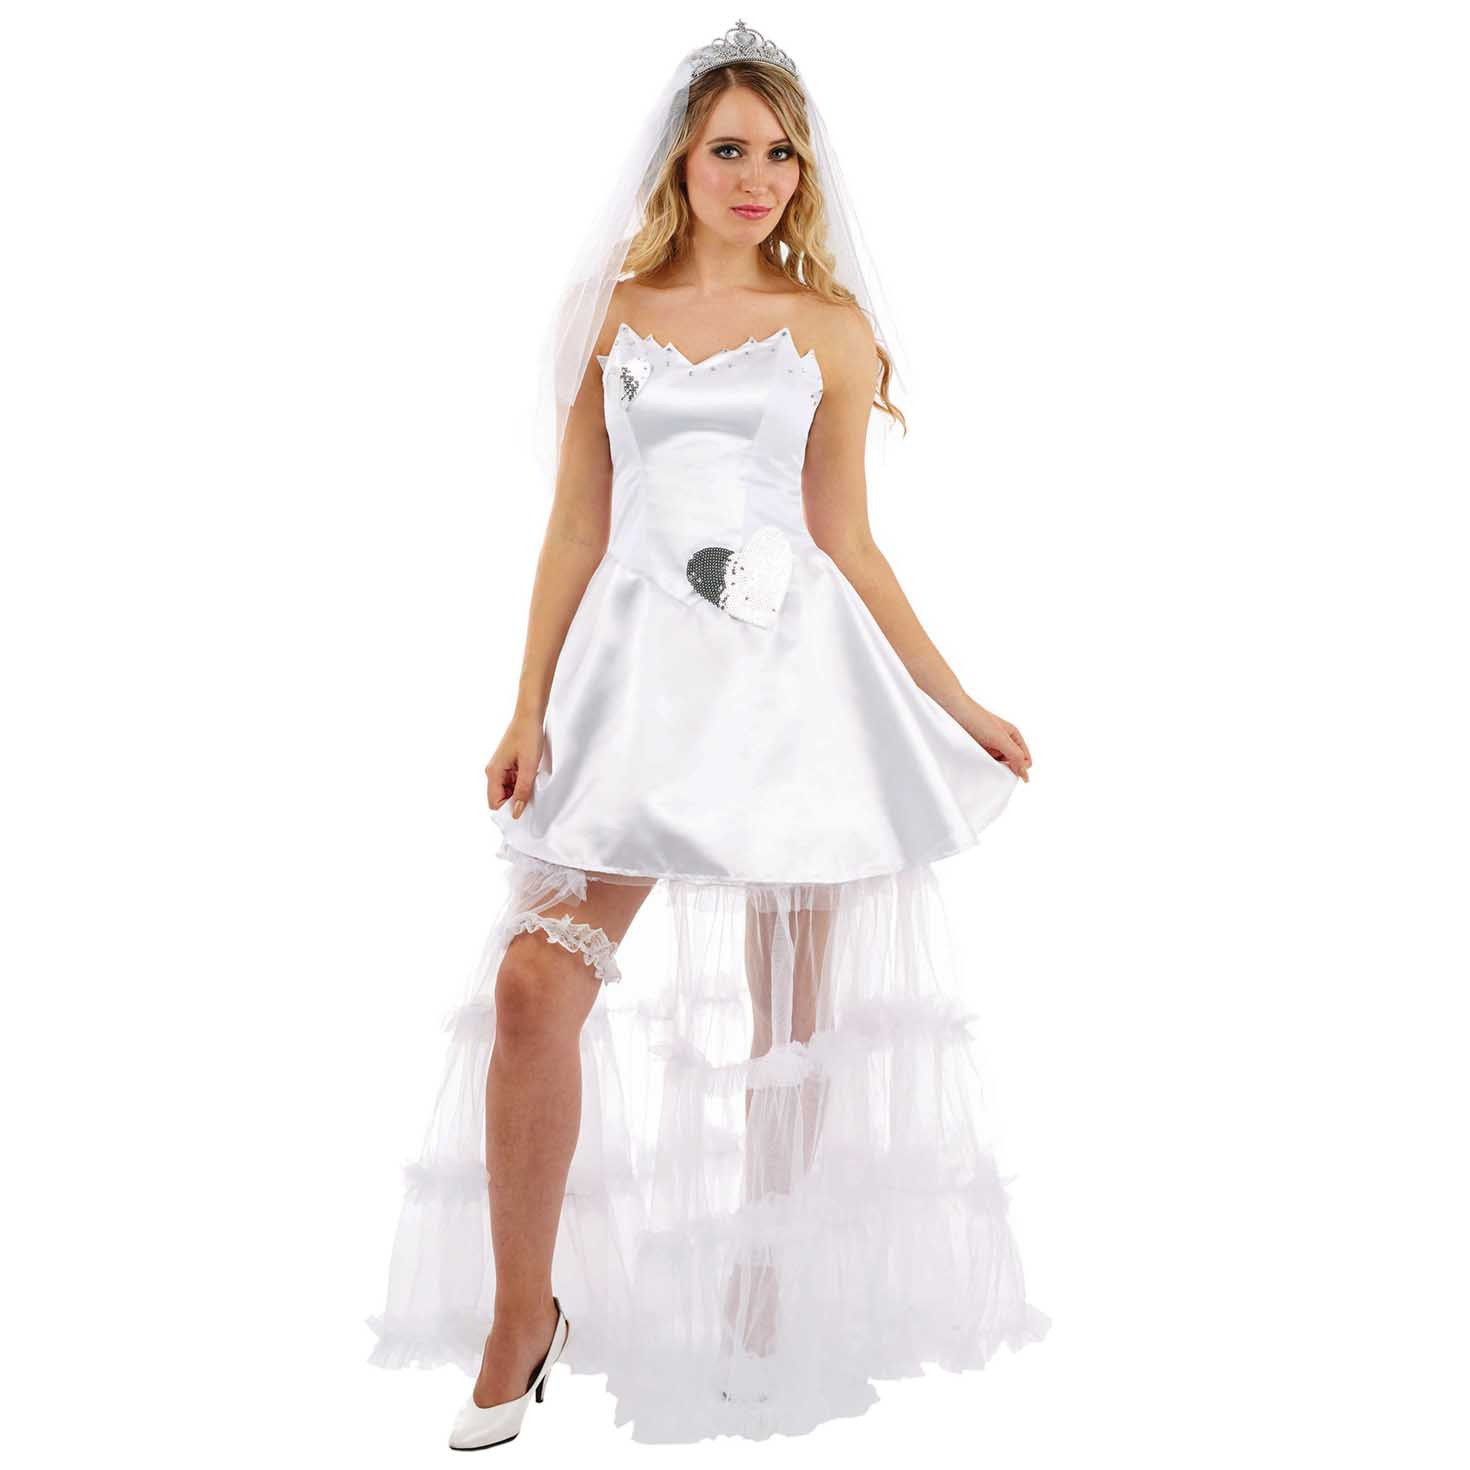 Like A Virgin Bride Costume, Sexy Bride Halloween Costume – 3wishes.com